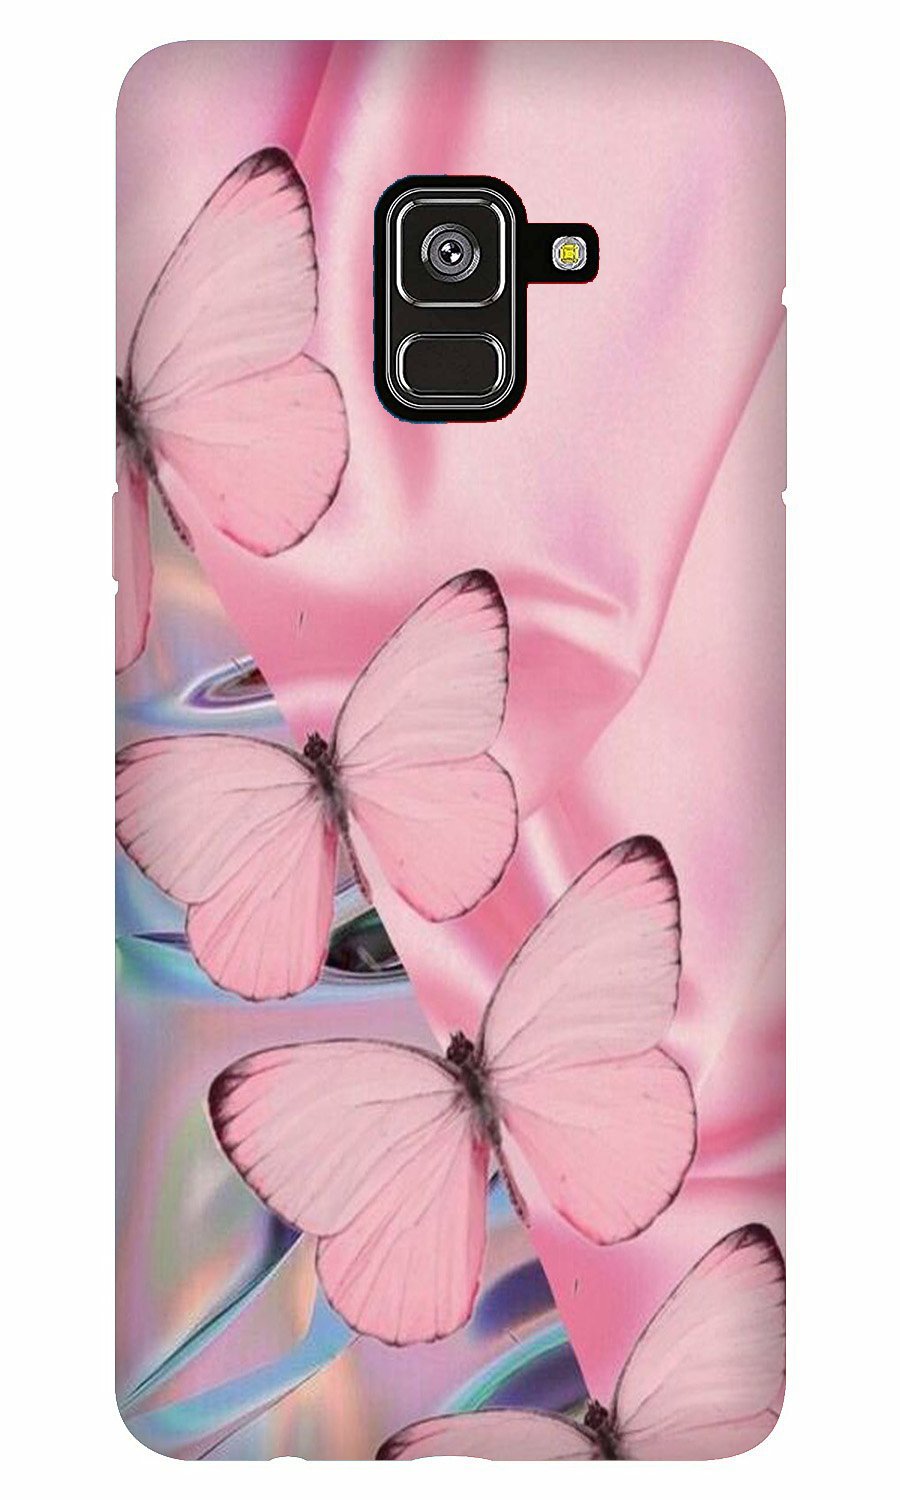 Butterflies Case for Galaxy A8 Plus